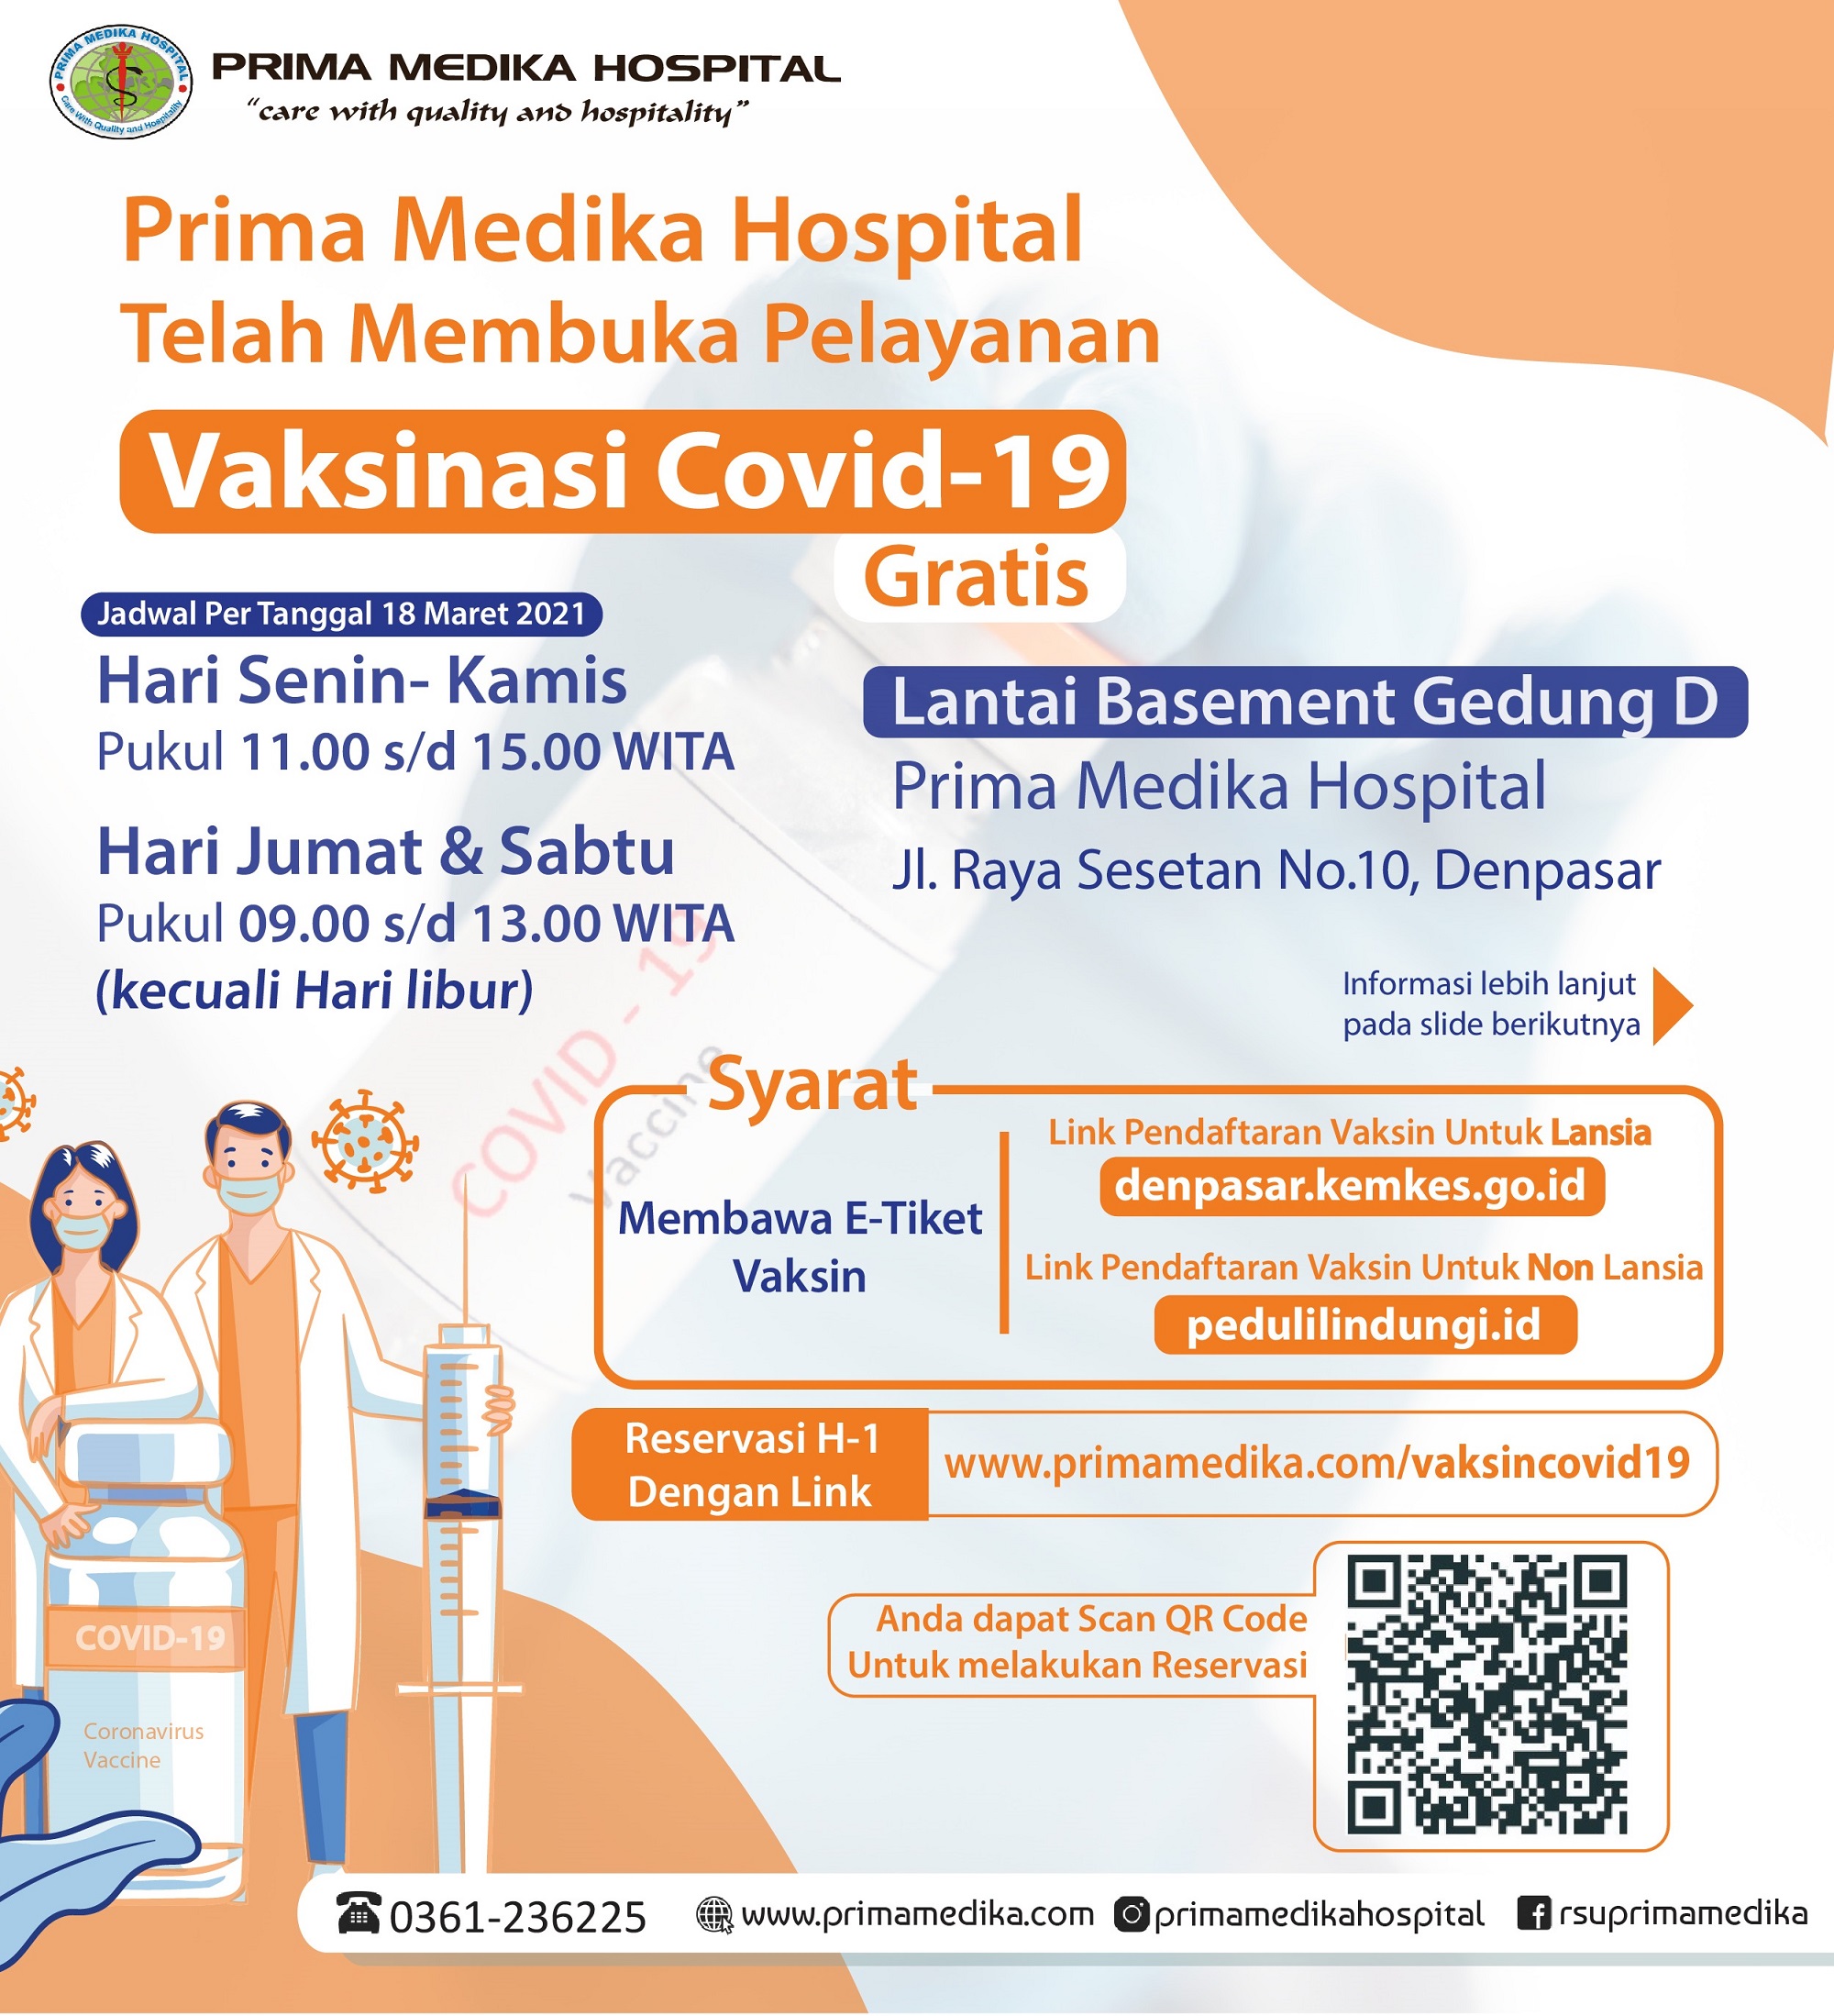 Prima Medika Hospital Melayani Pelayanan Vaksinasi Covid-19